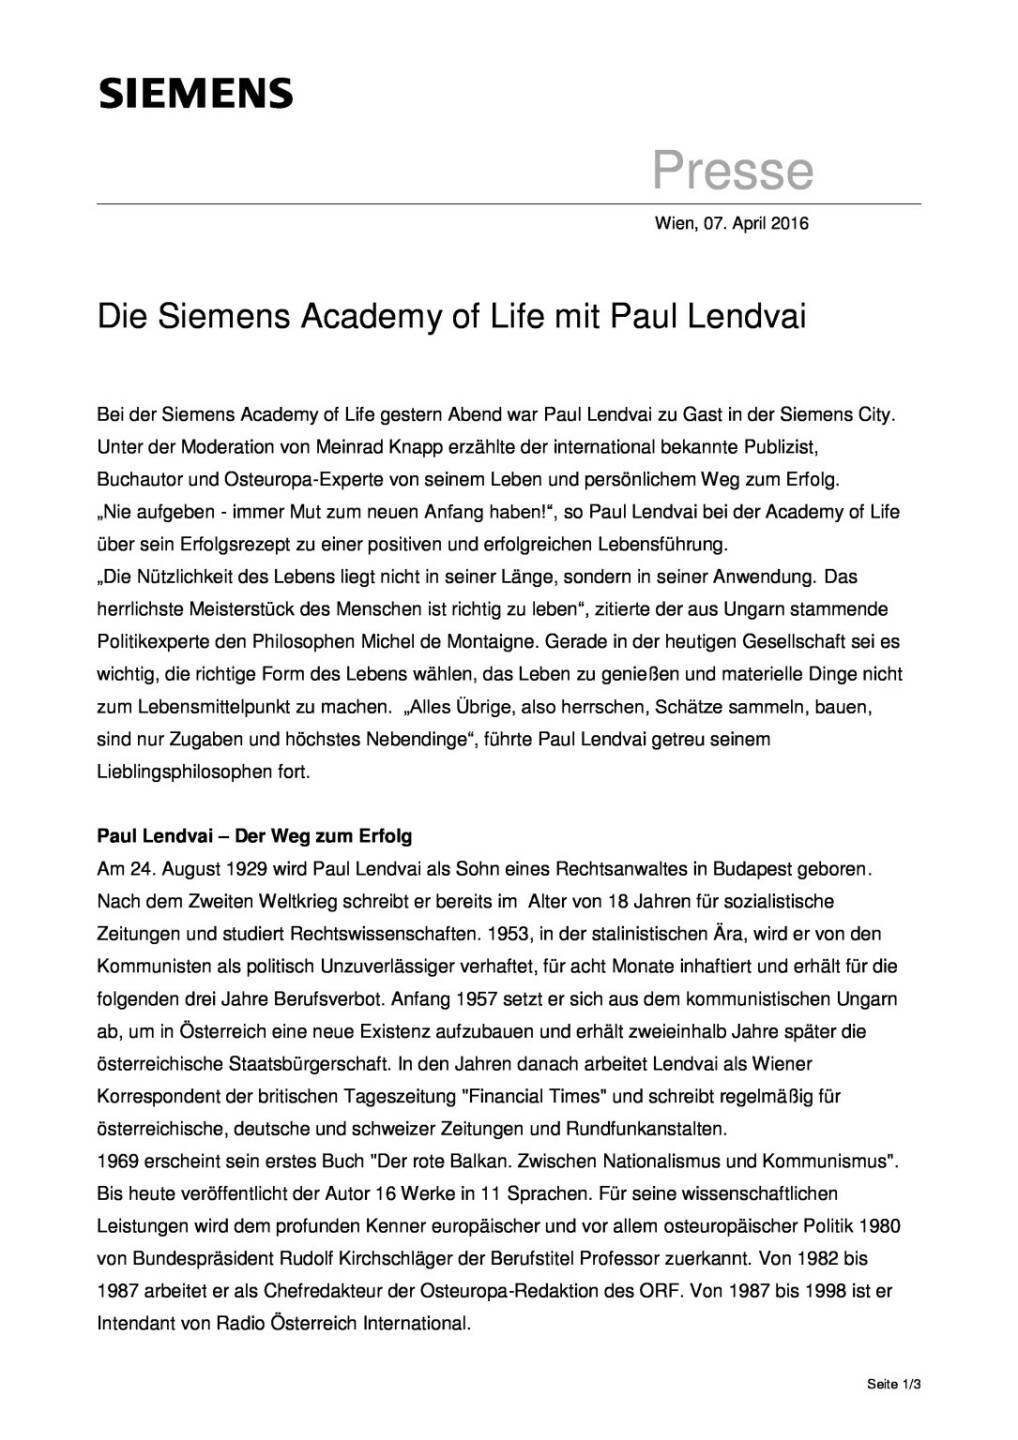 Siemens Academy of Life mit Paul Lendvai , Seite 1/3, komplettes Dokument unter http://boerse-social.com/static/uploads/file_858_siemens_academy_of_life_mit_paul_lendvai.pdf